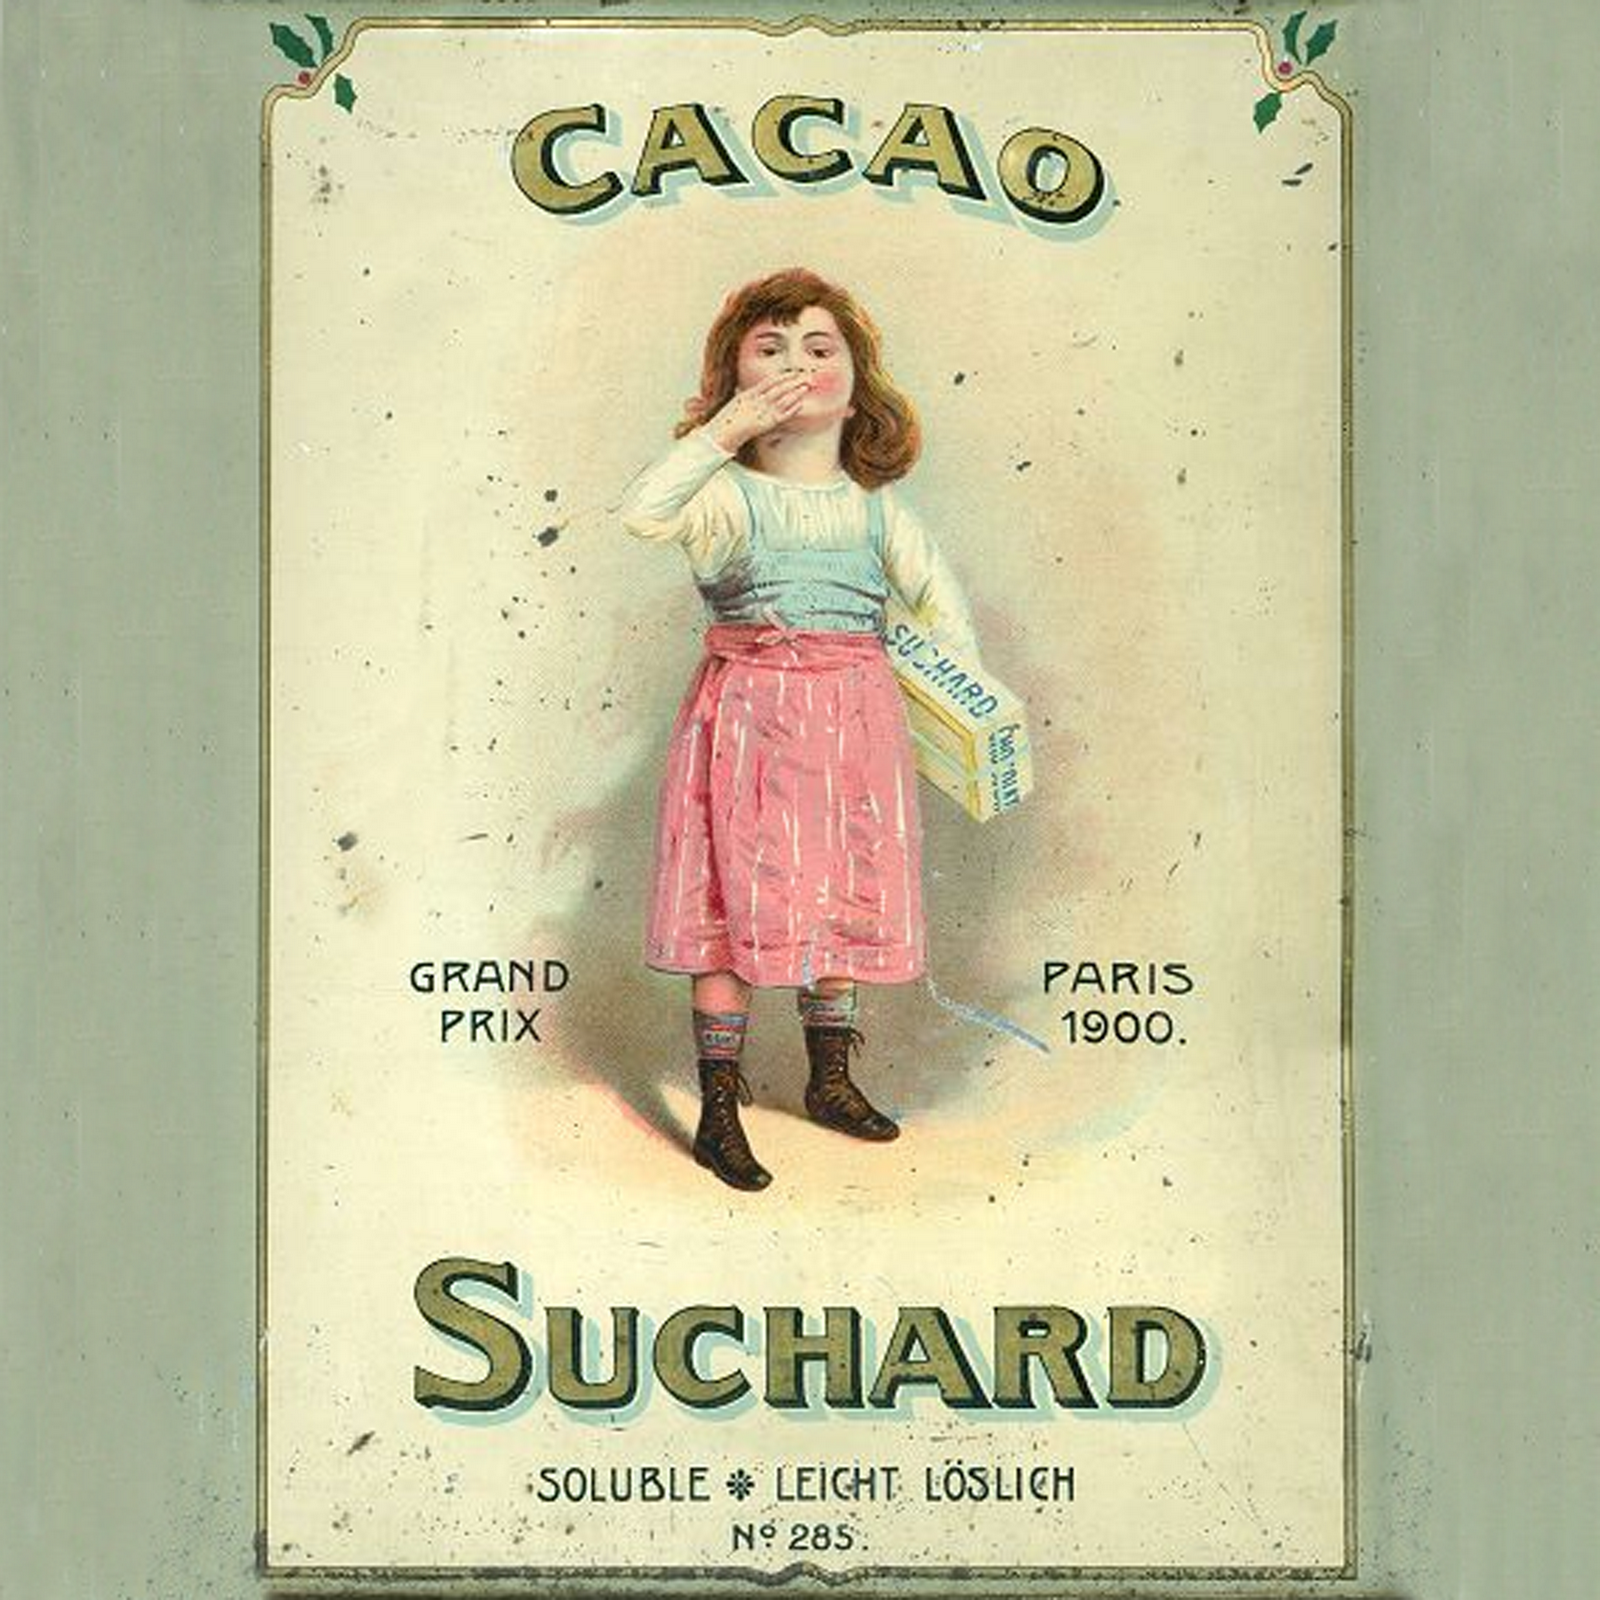 Vintage Chocolate Advertising